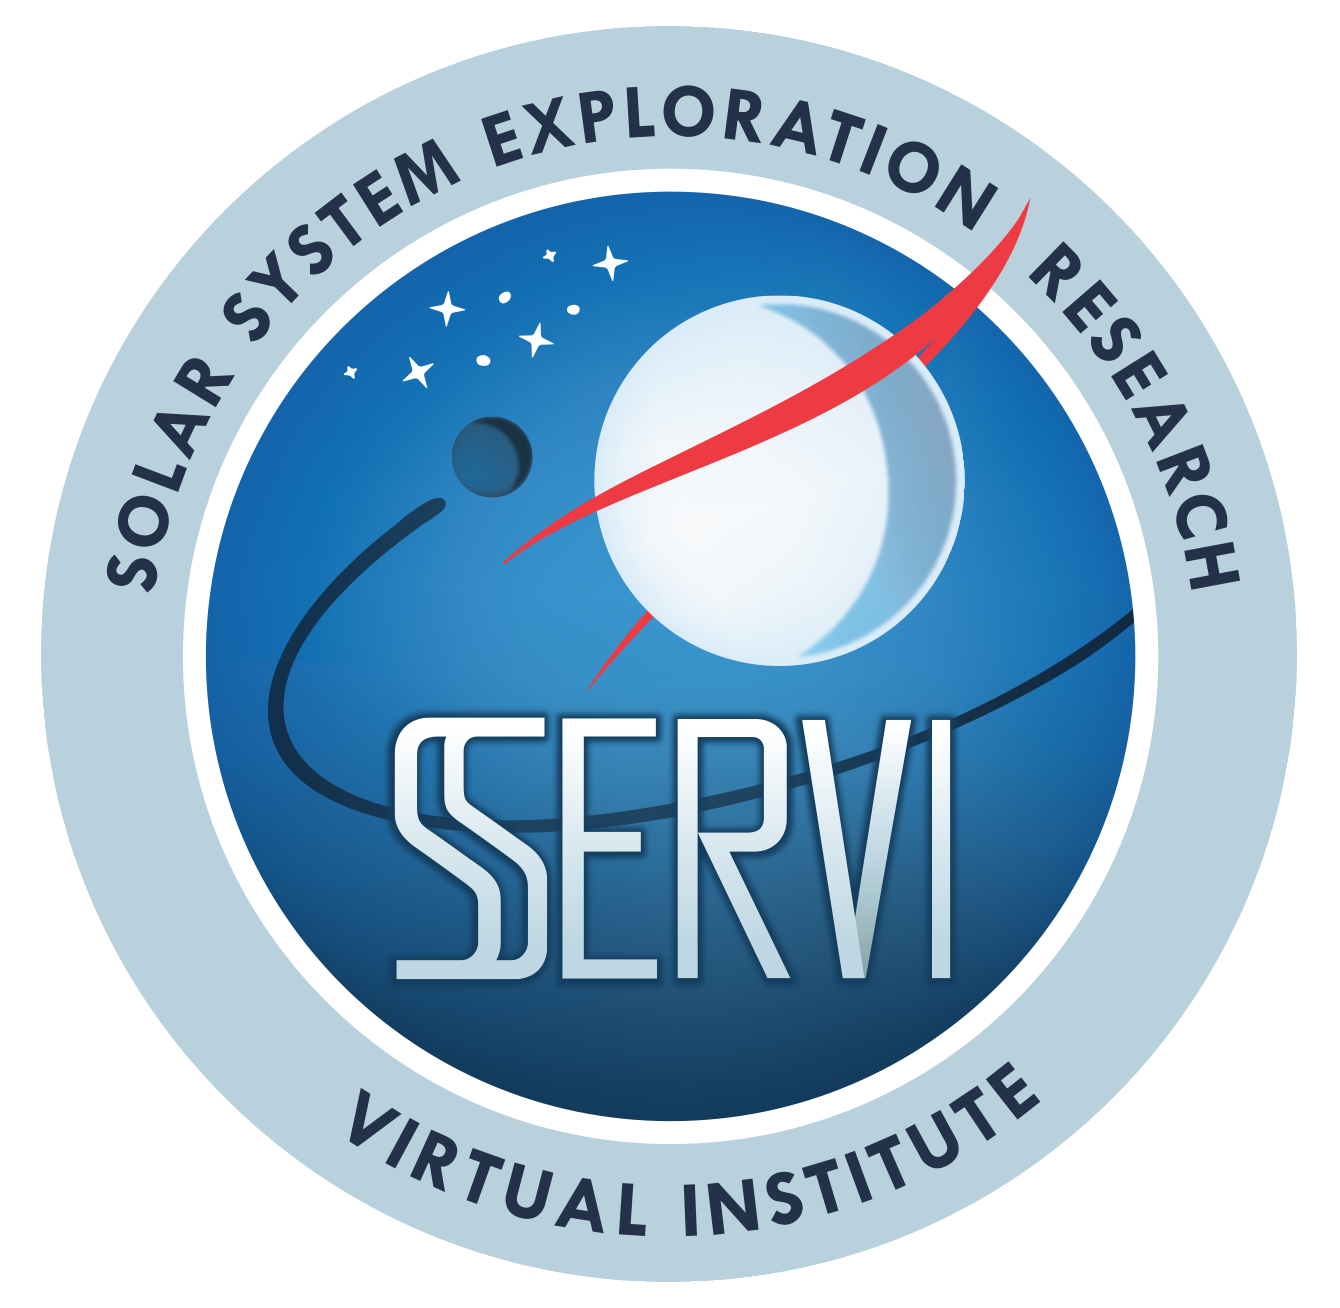 Solar System Exploration Research Virtual Institute